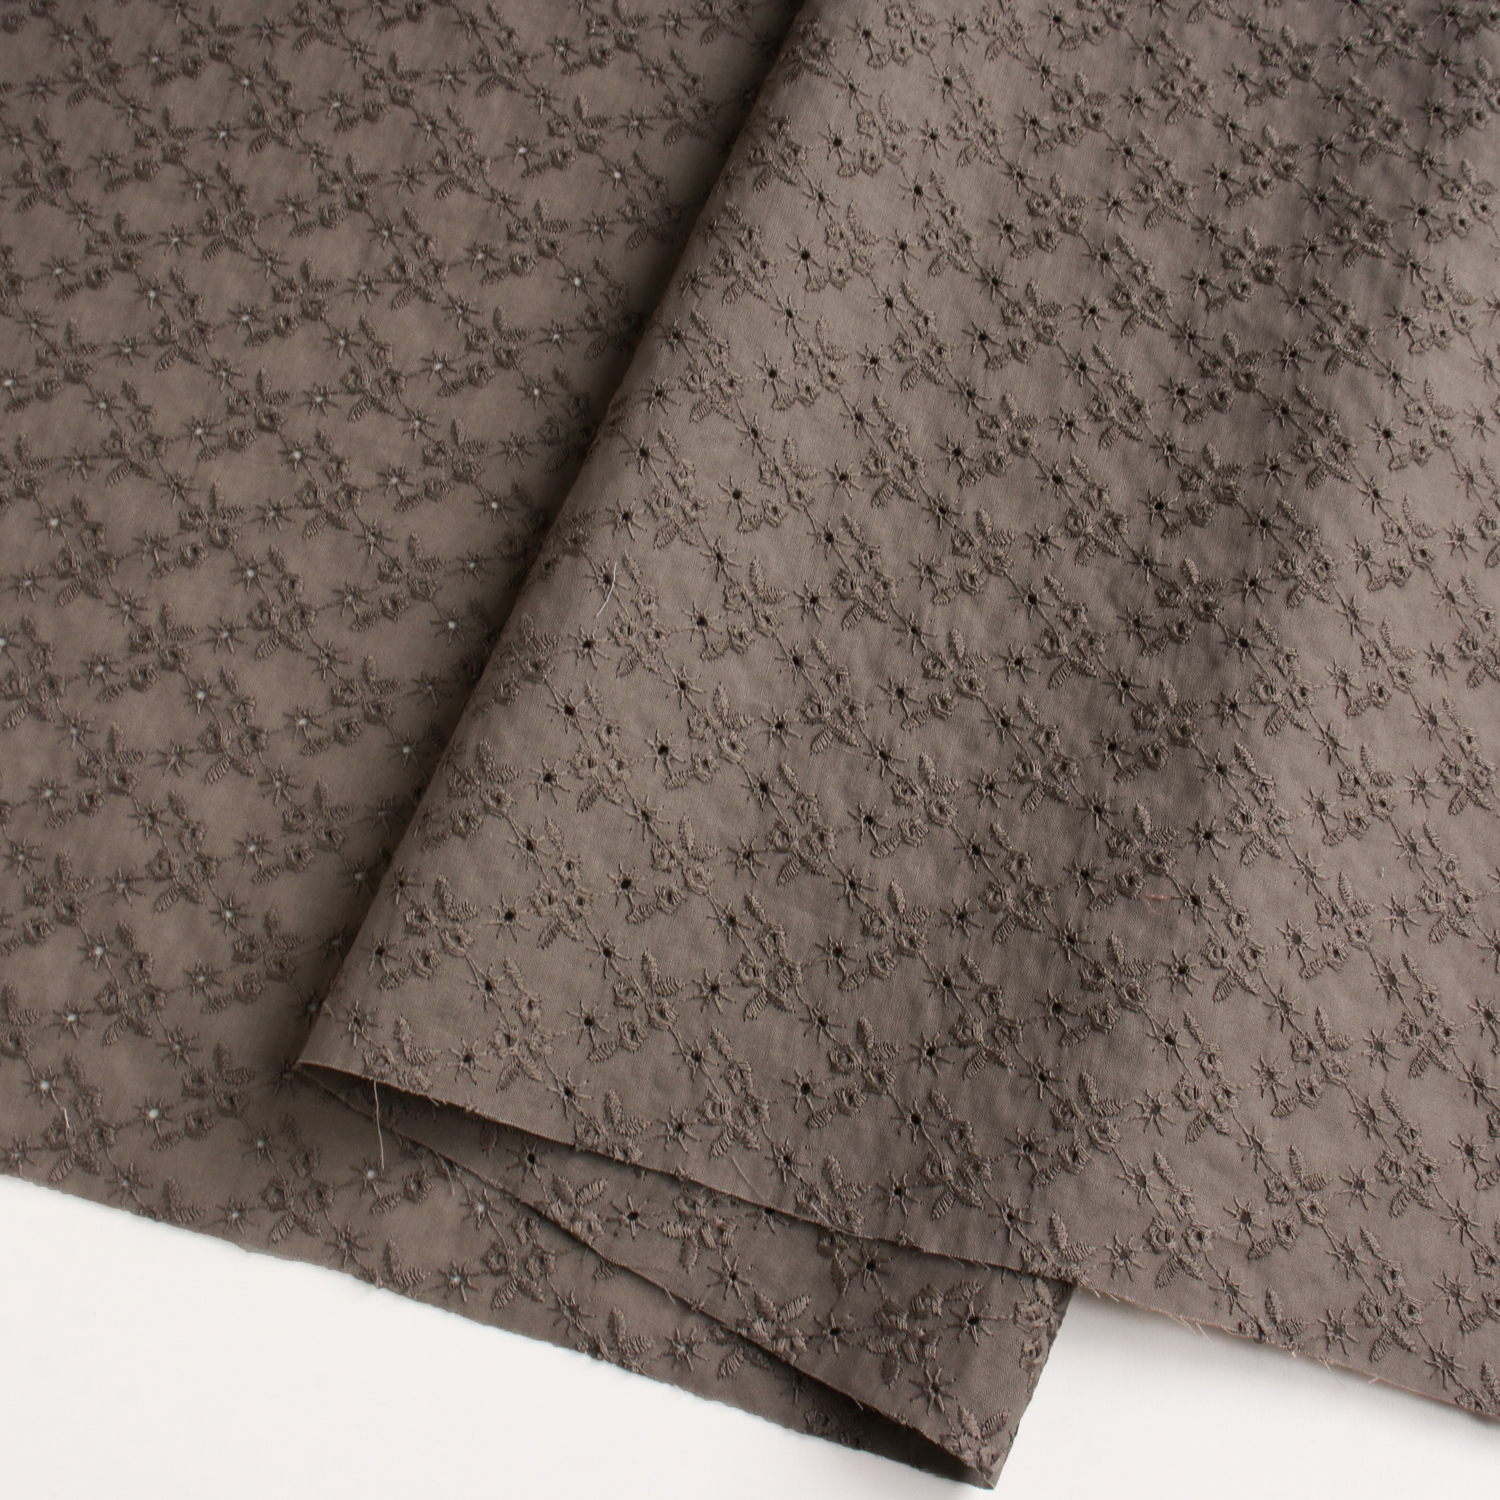 AL694R-94 cotton lace fabric, Width 100cm, 〇m roll (roll)